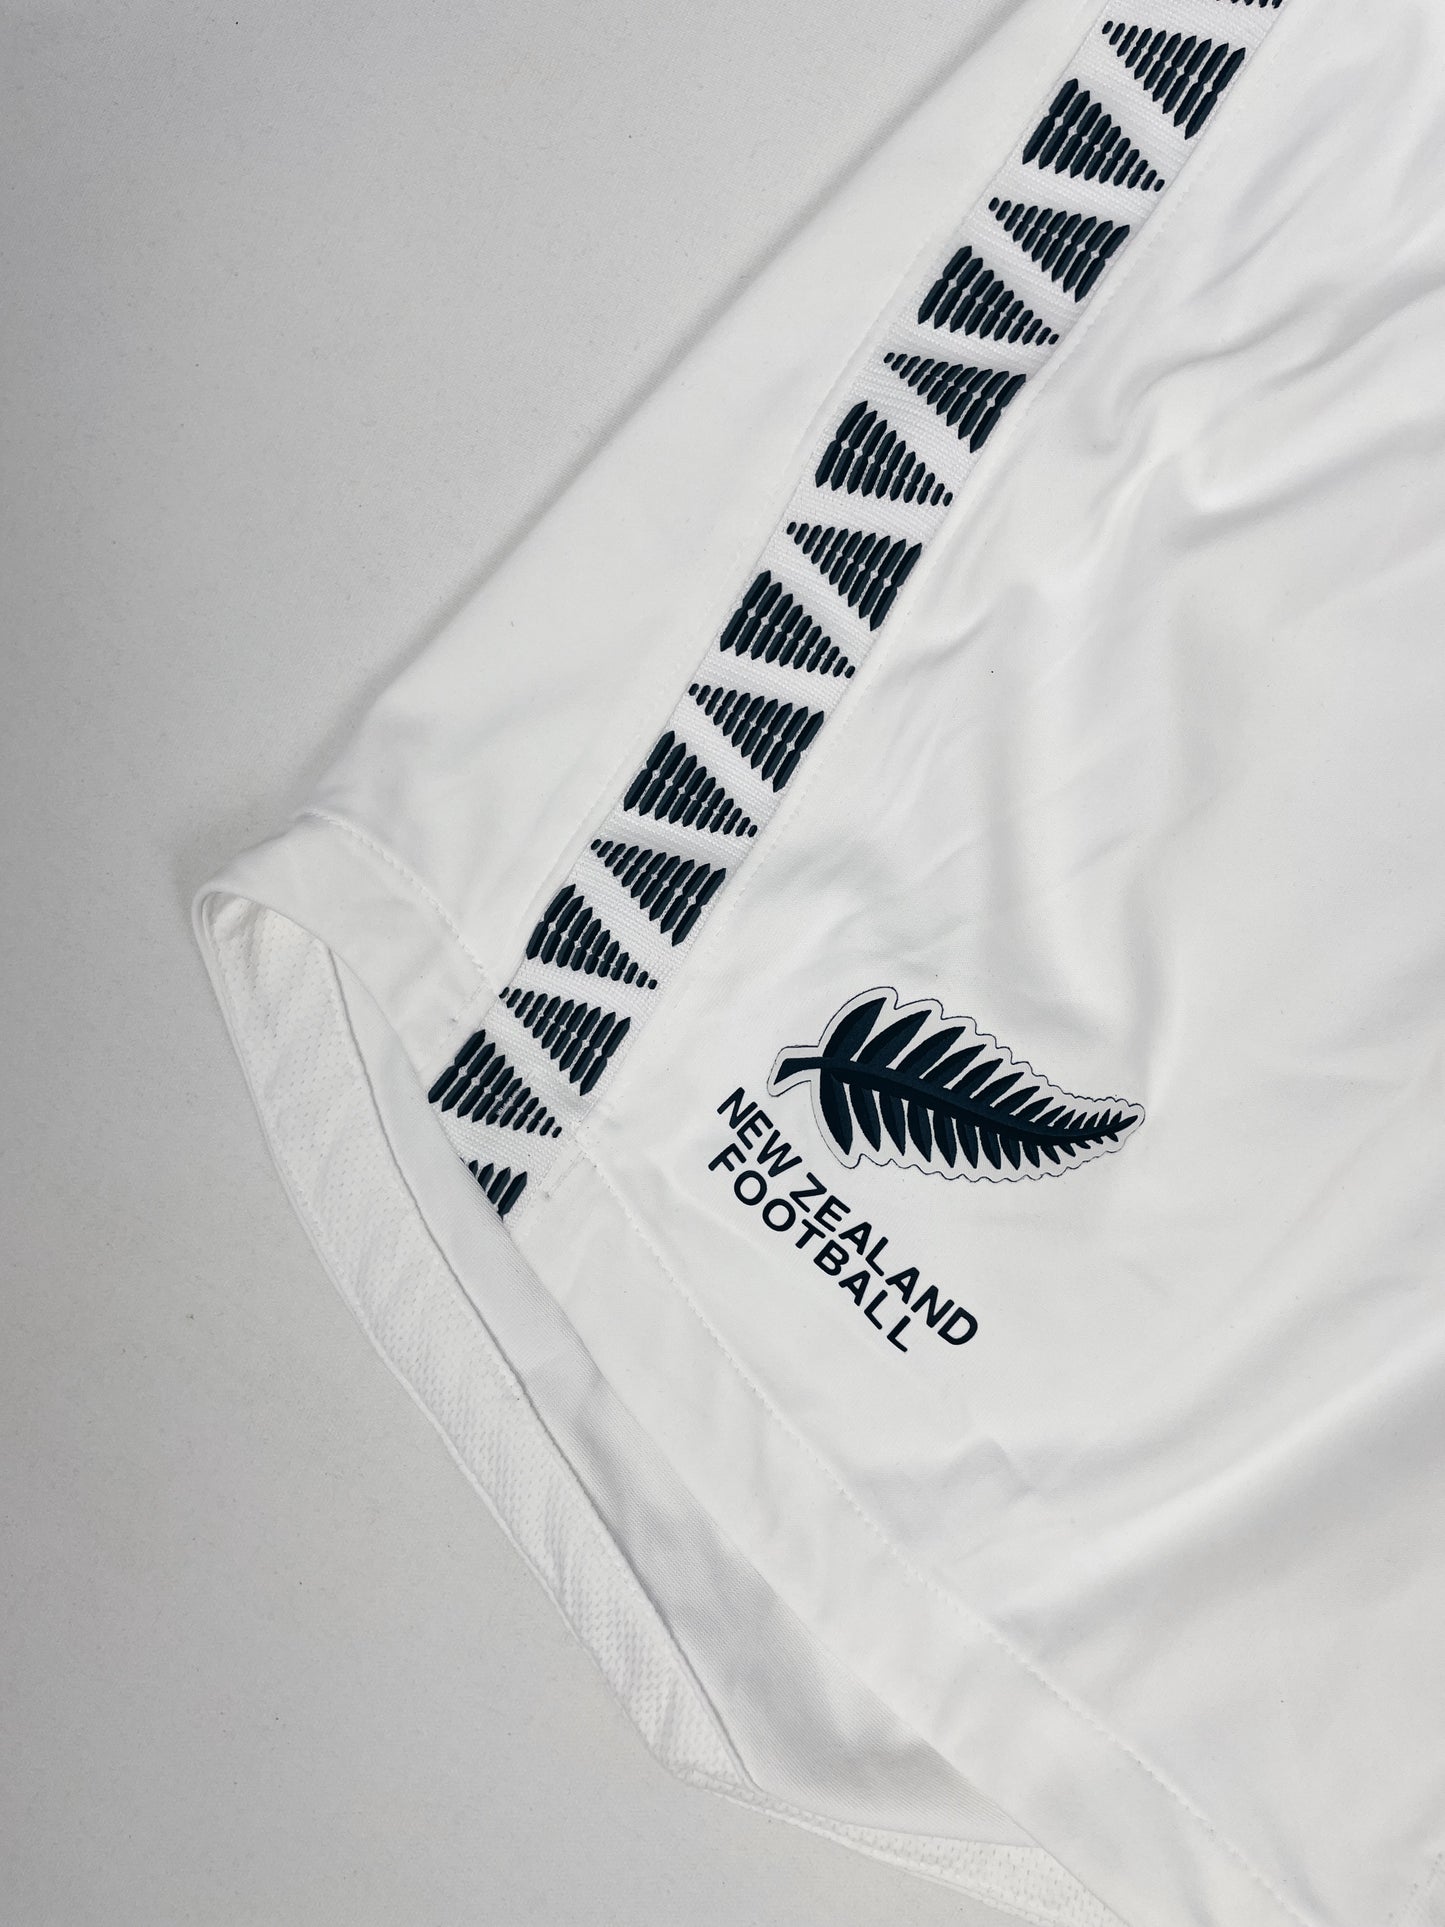 New Zealand #3 Player Shorts (Women's M)